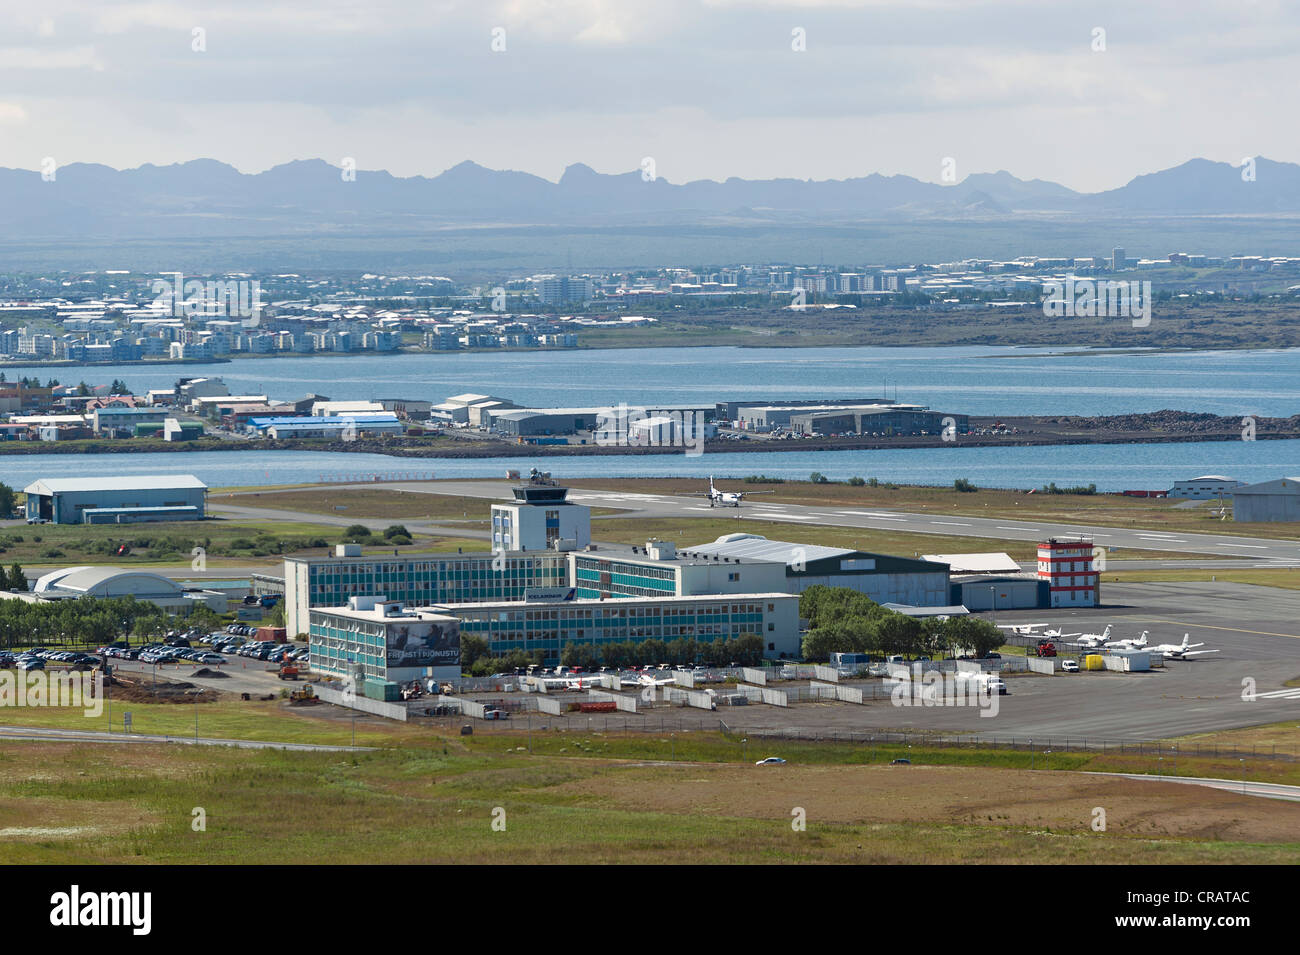 Reykjavik airport from the Tower of the Hallgrímskirkja church, Reykjavik, Iceland, Europe Stock Photo